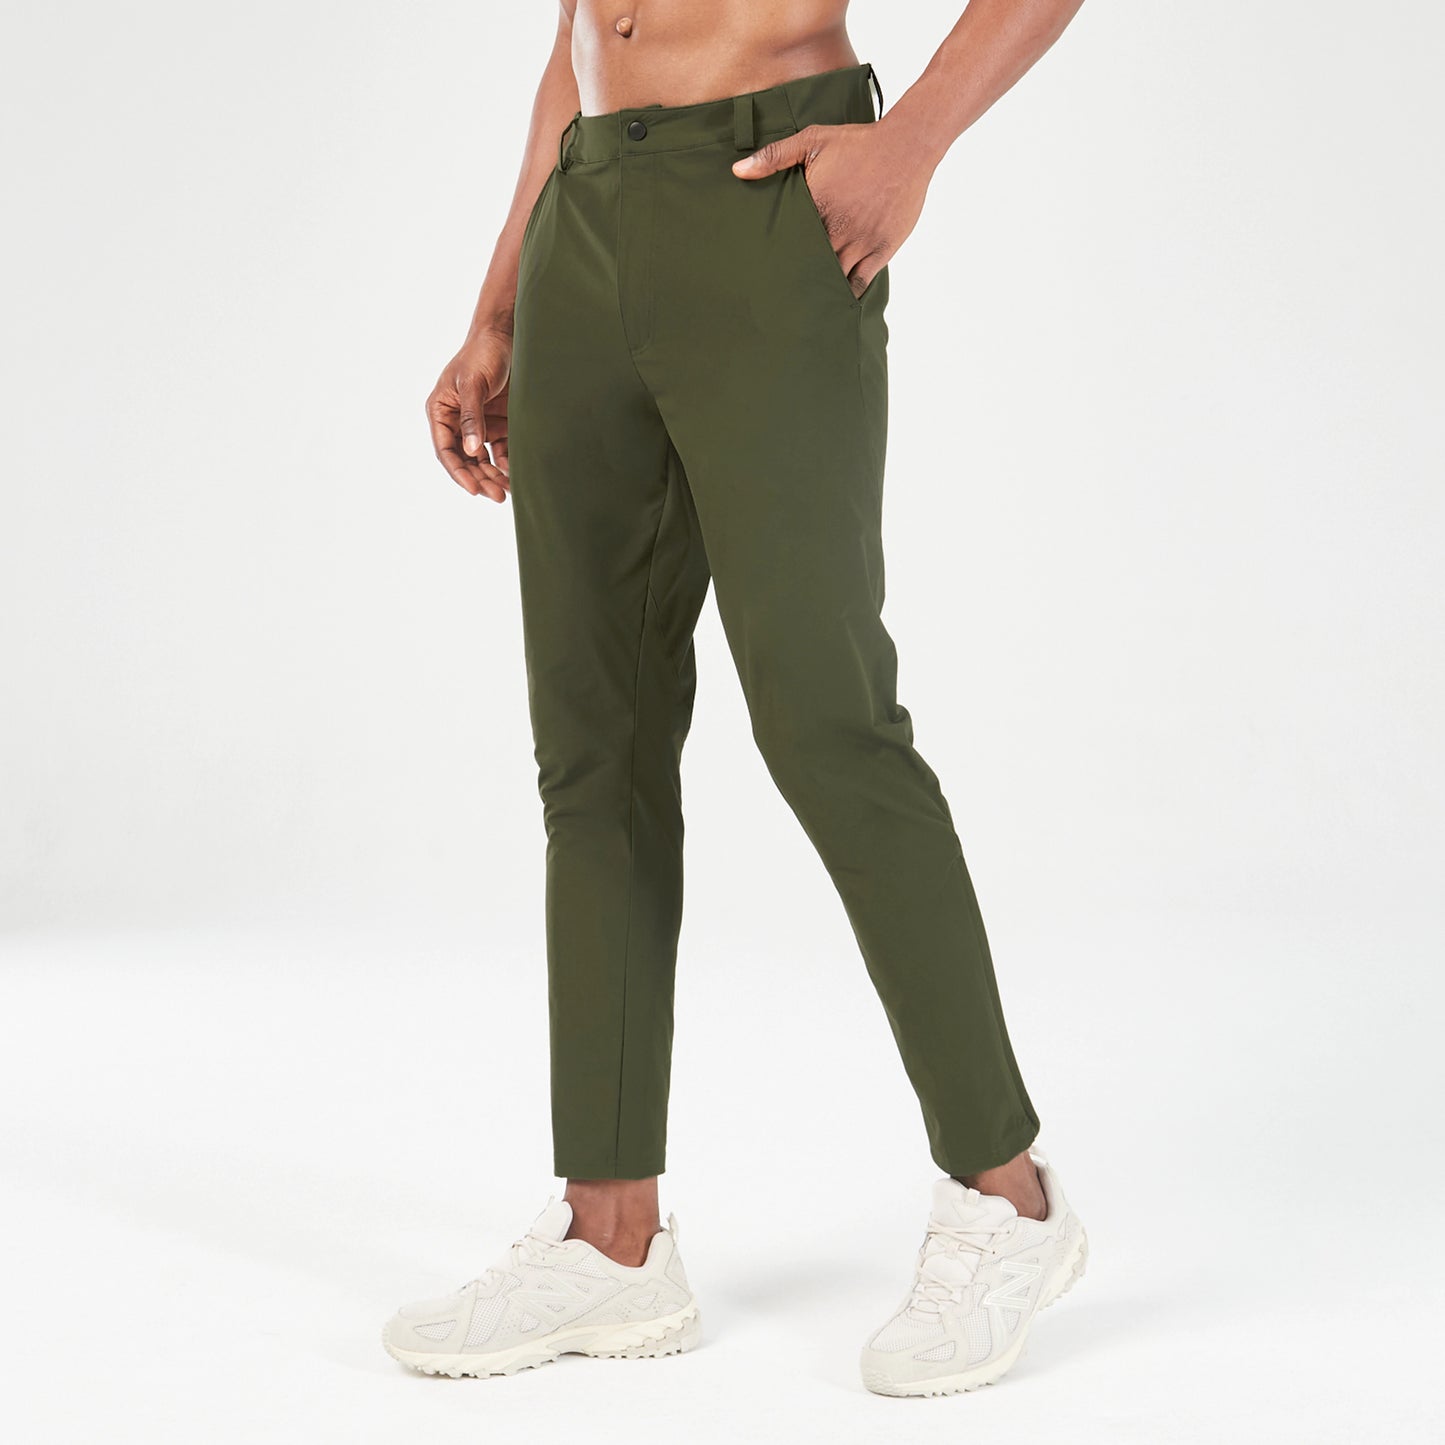 AE | Statement Ribbed Smart Pants - Kombu green | Gym Pants | SQUATWOLF